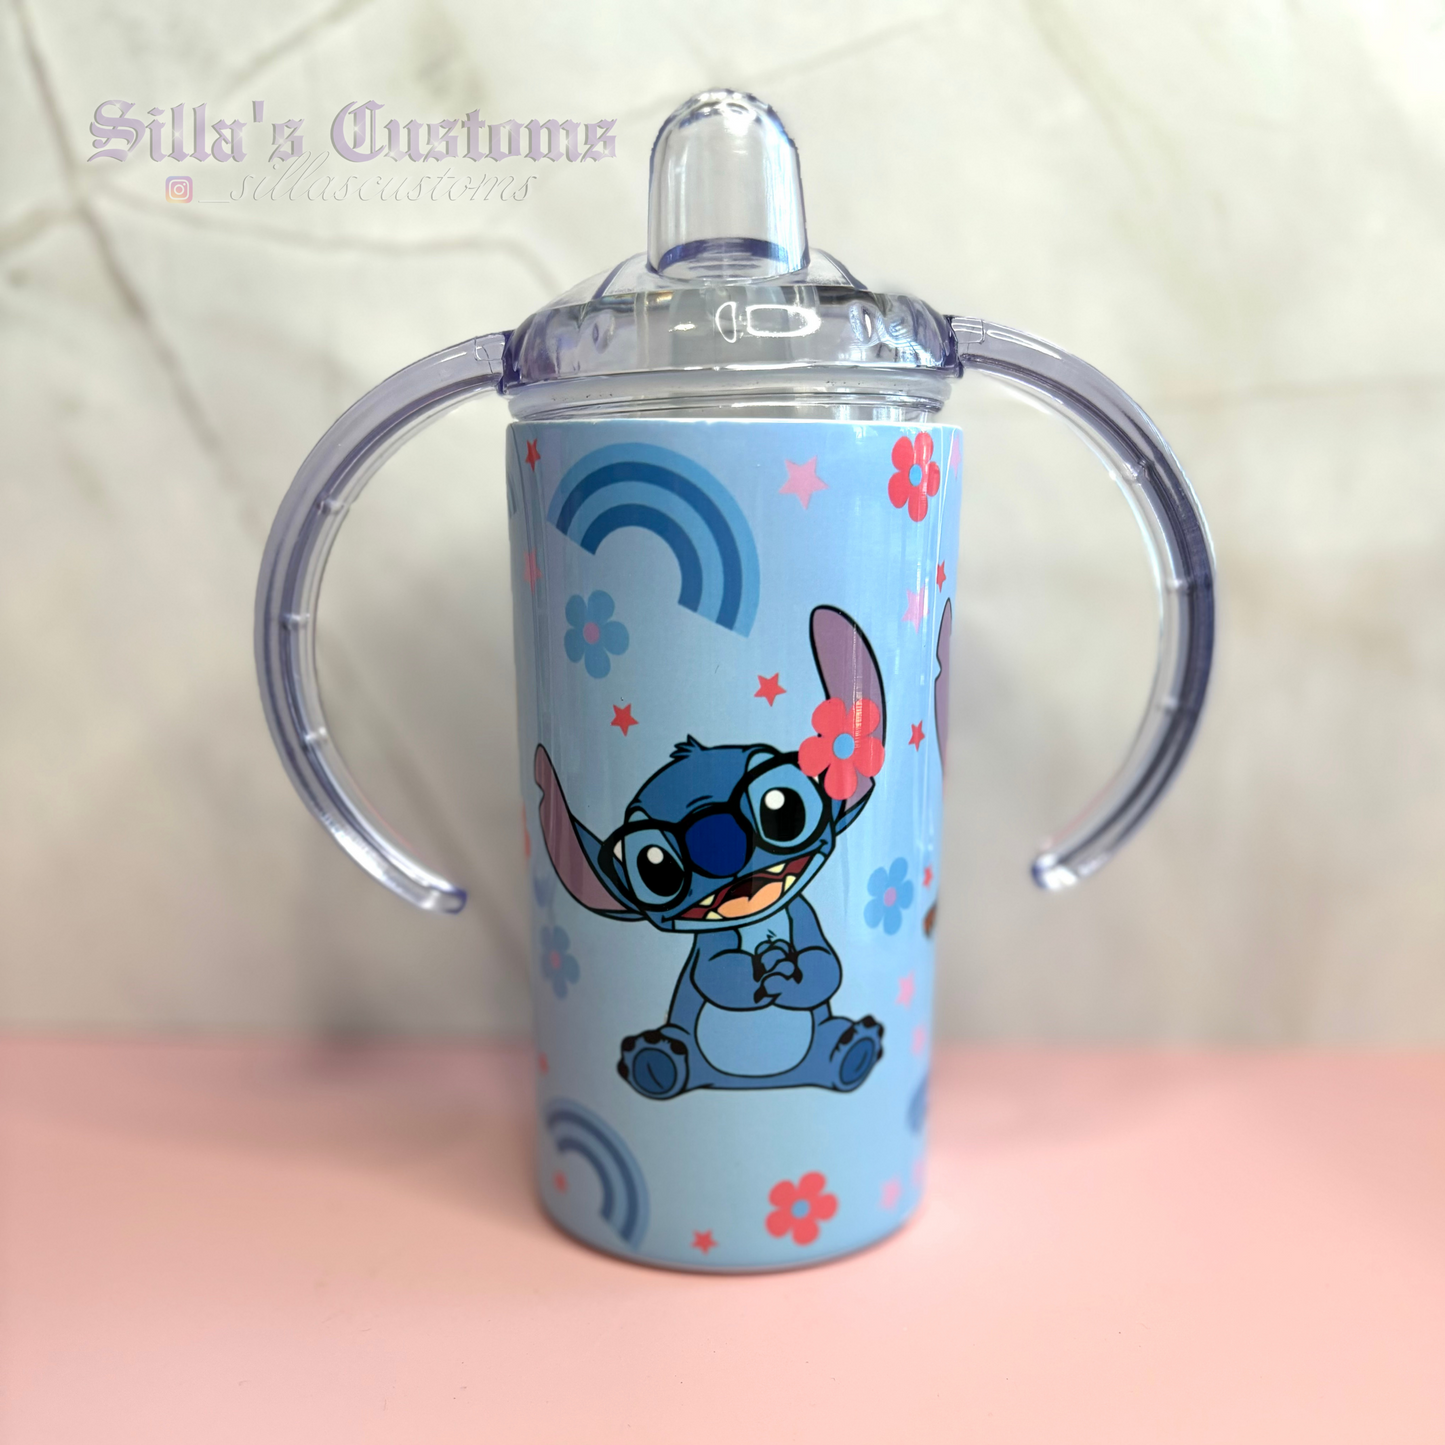 Blue Alien Tumbler/ Sippy Cup